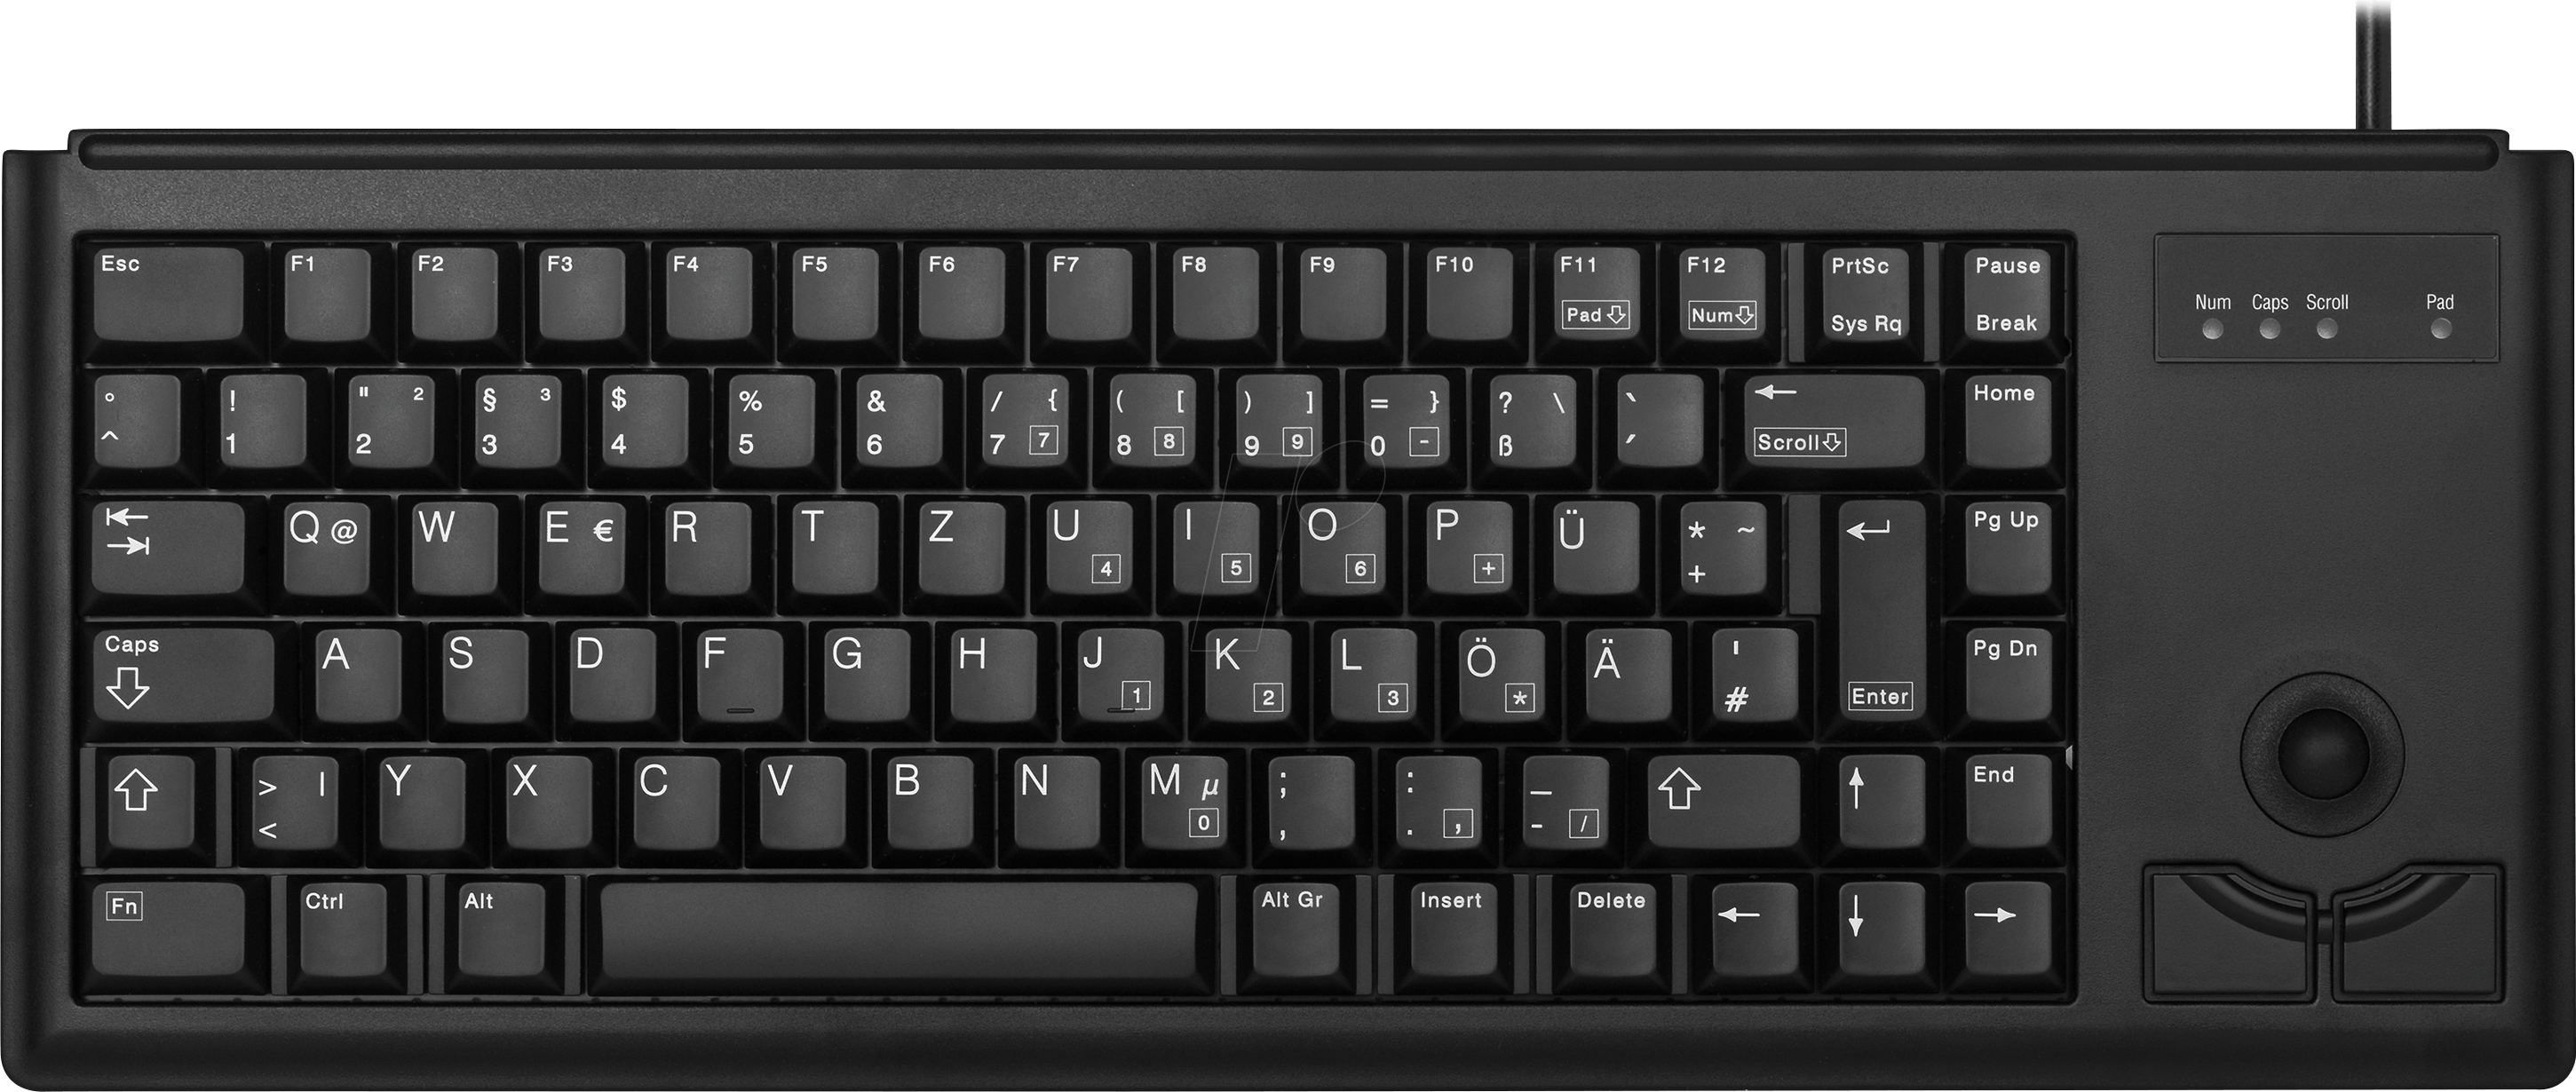 G84-4400LUBDE-2 - Tastatur, USB, schwarz, kompakt, Trackball